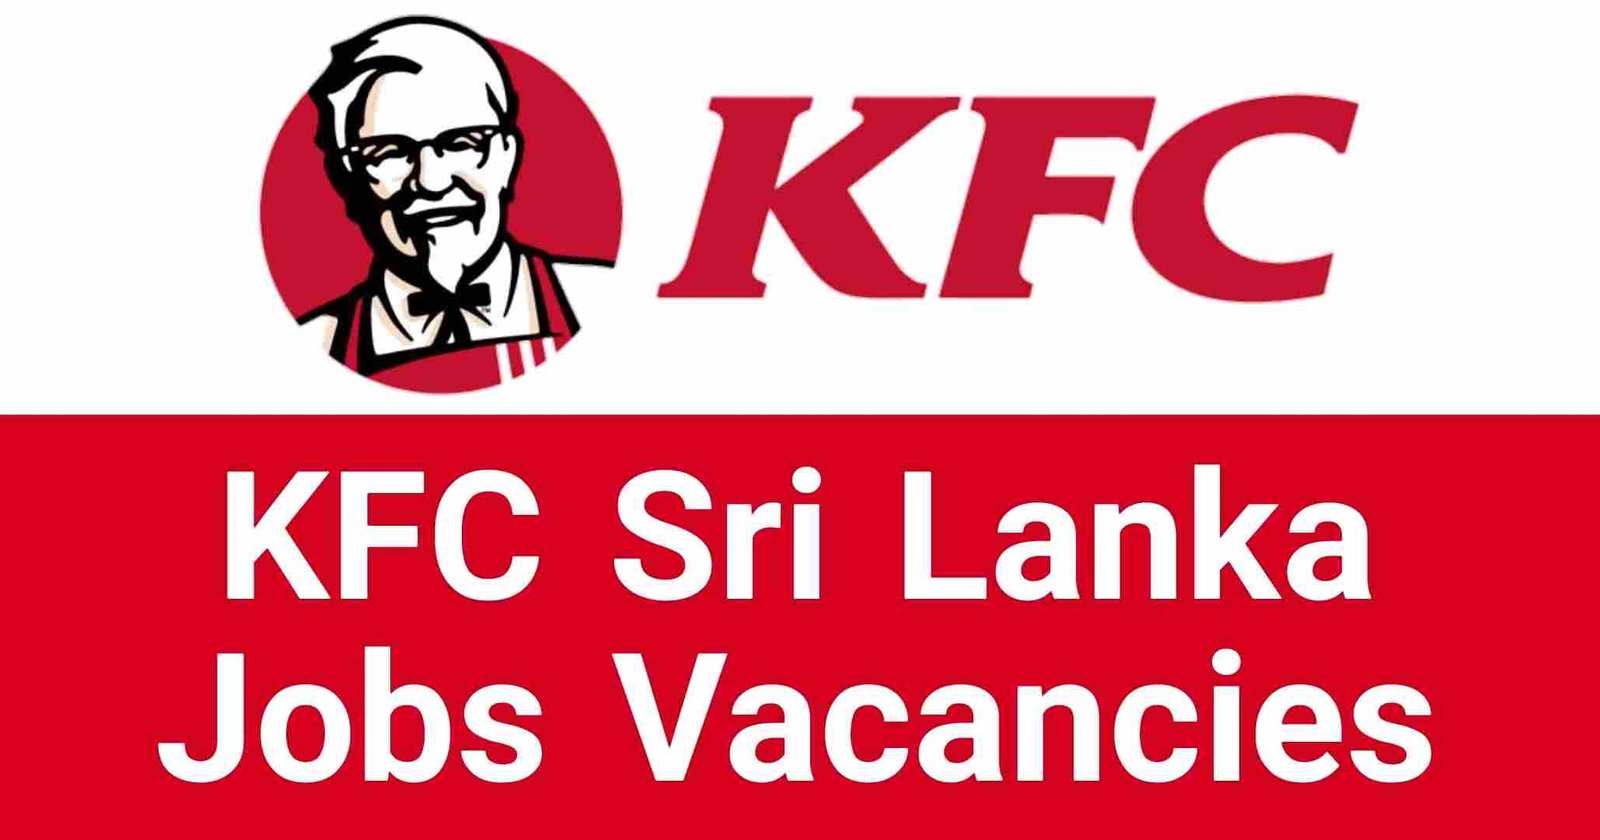 KFC Sri Lanka Jobs Vacancies